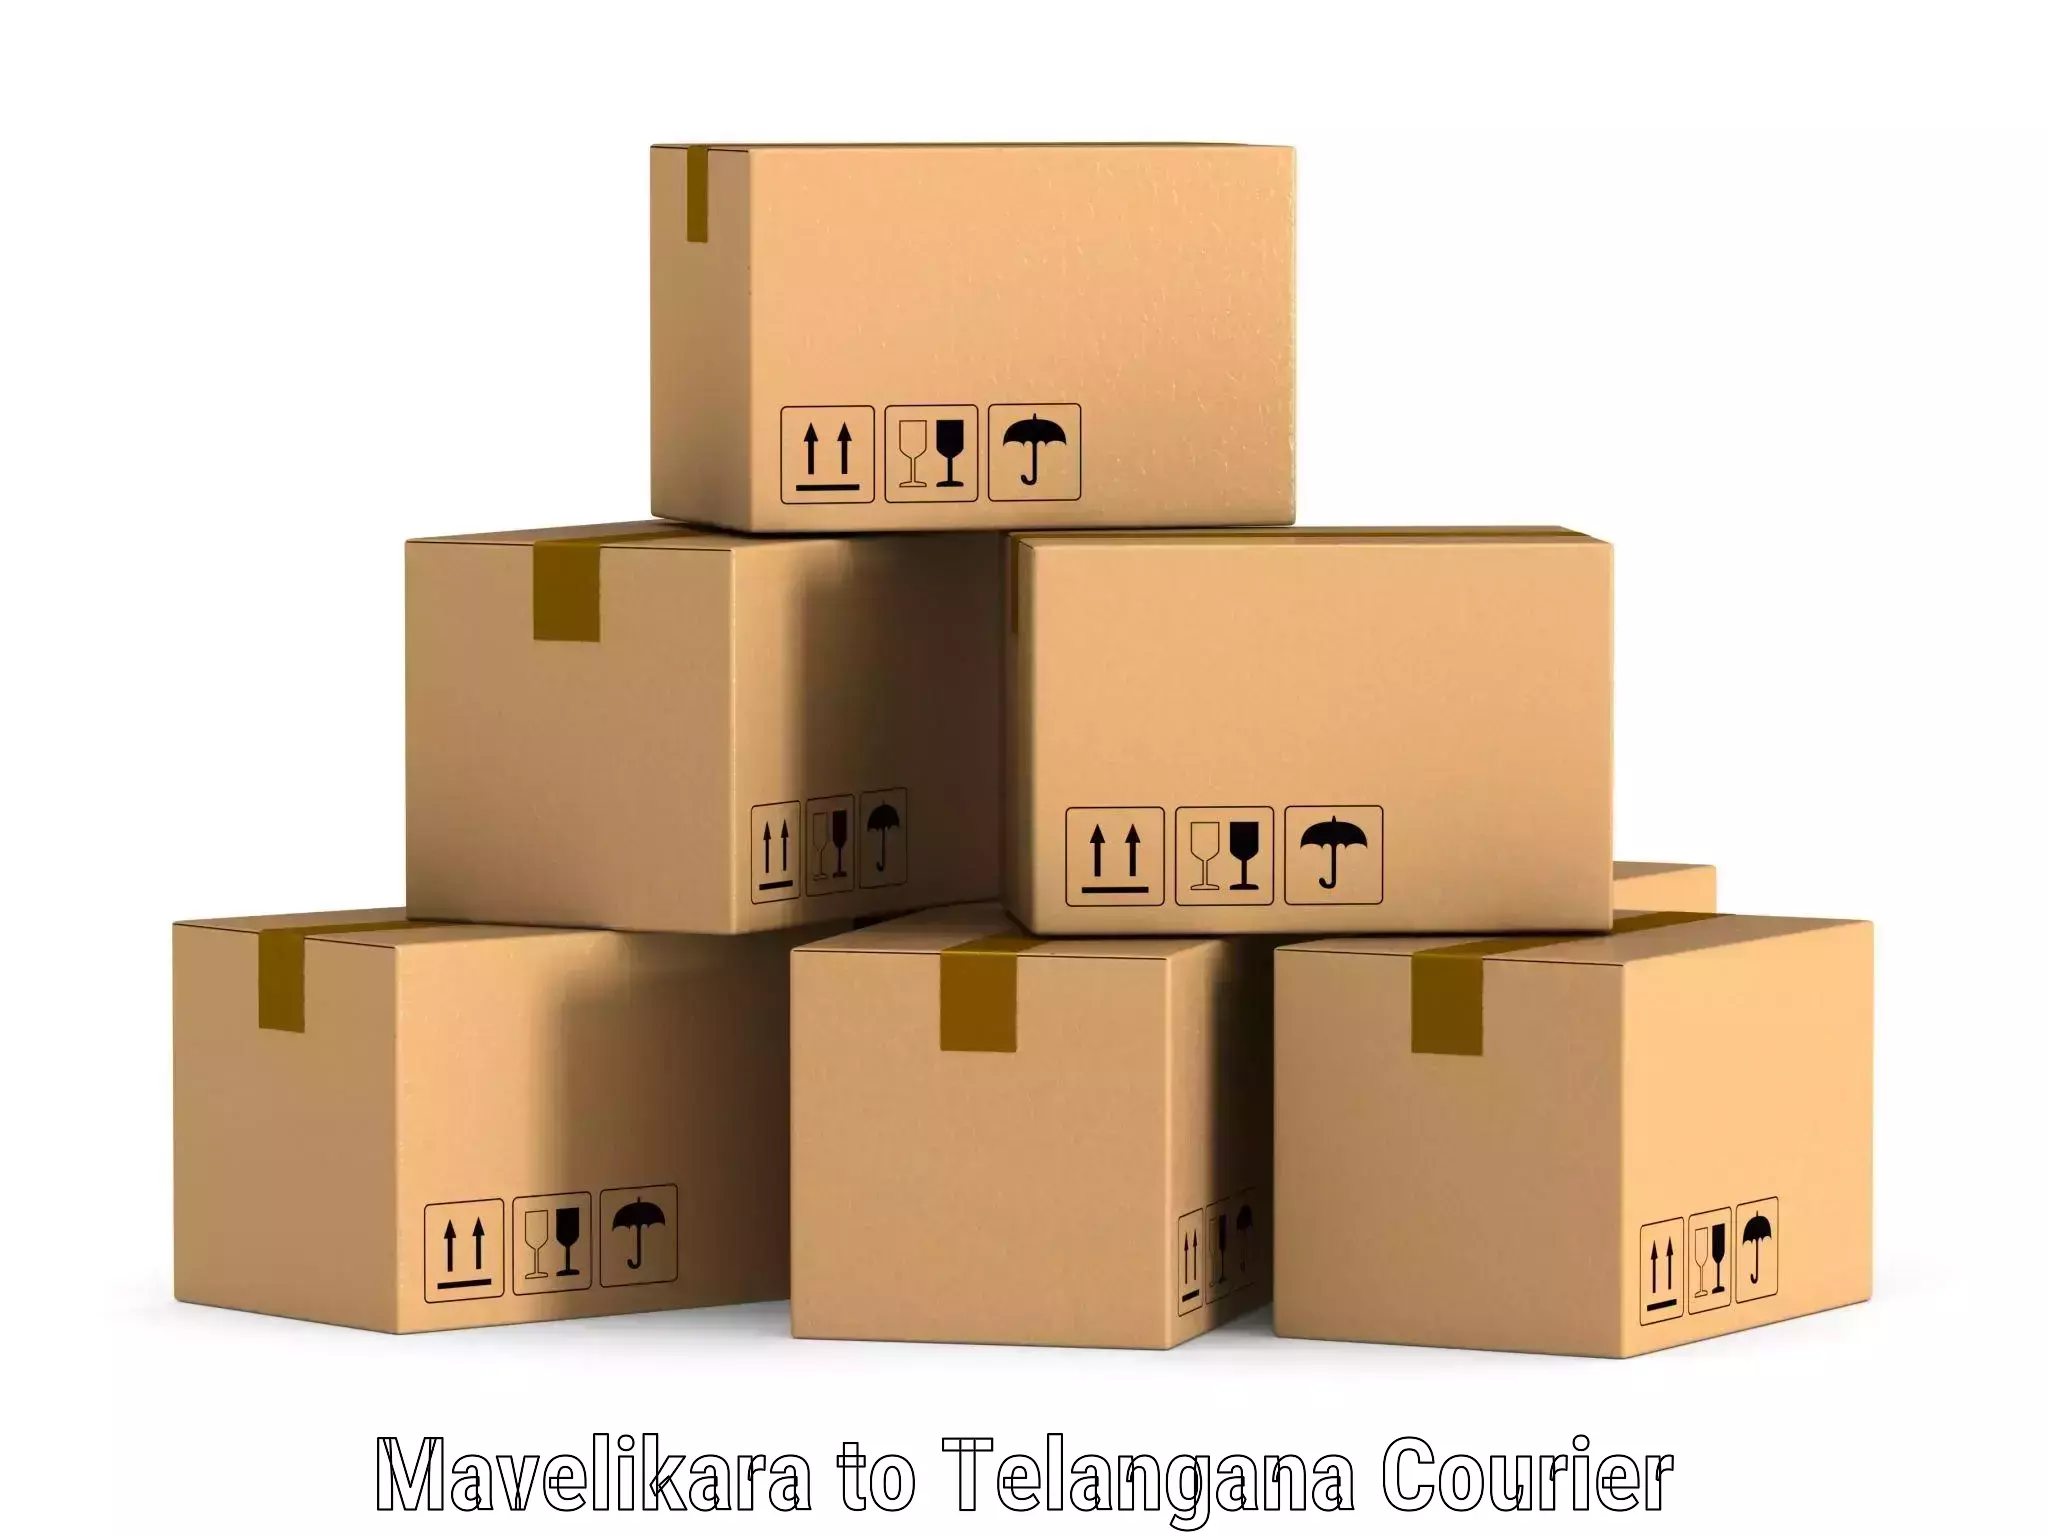 Round-the-clock parcel delivery Mavelikara to Eligedu